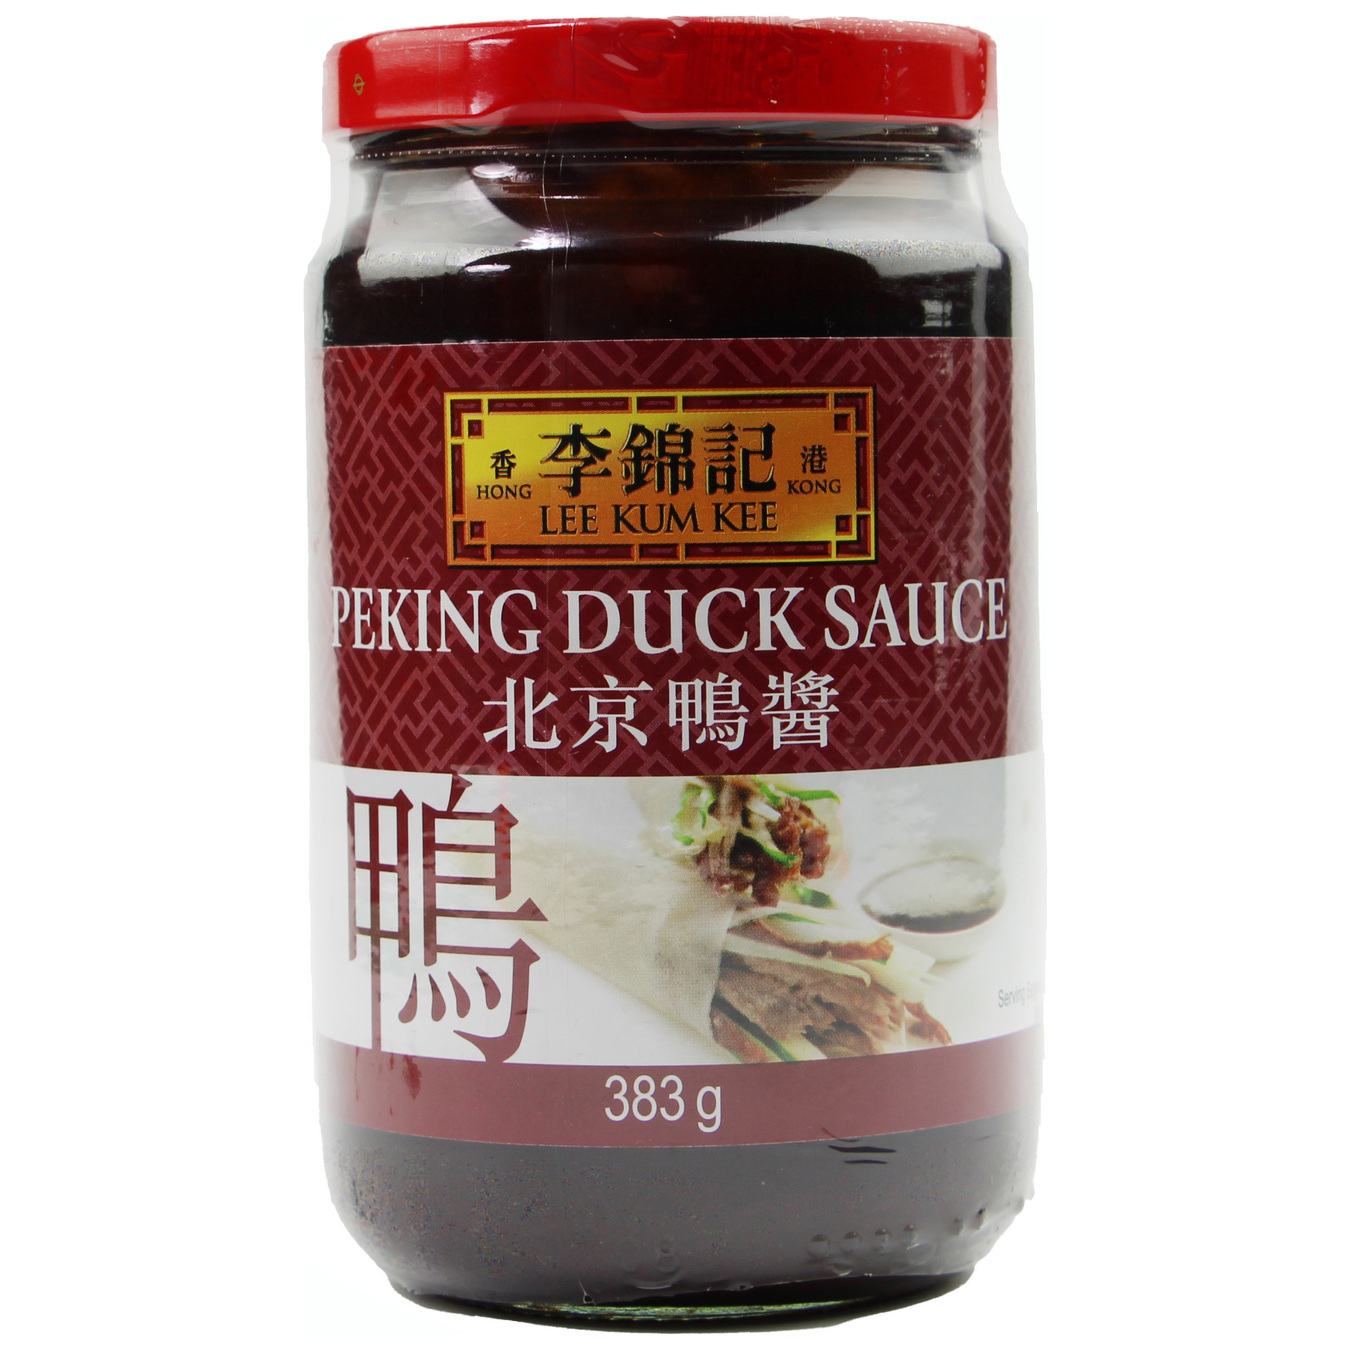 Lee Kum Kee sauce for Peking duck 383g